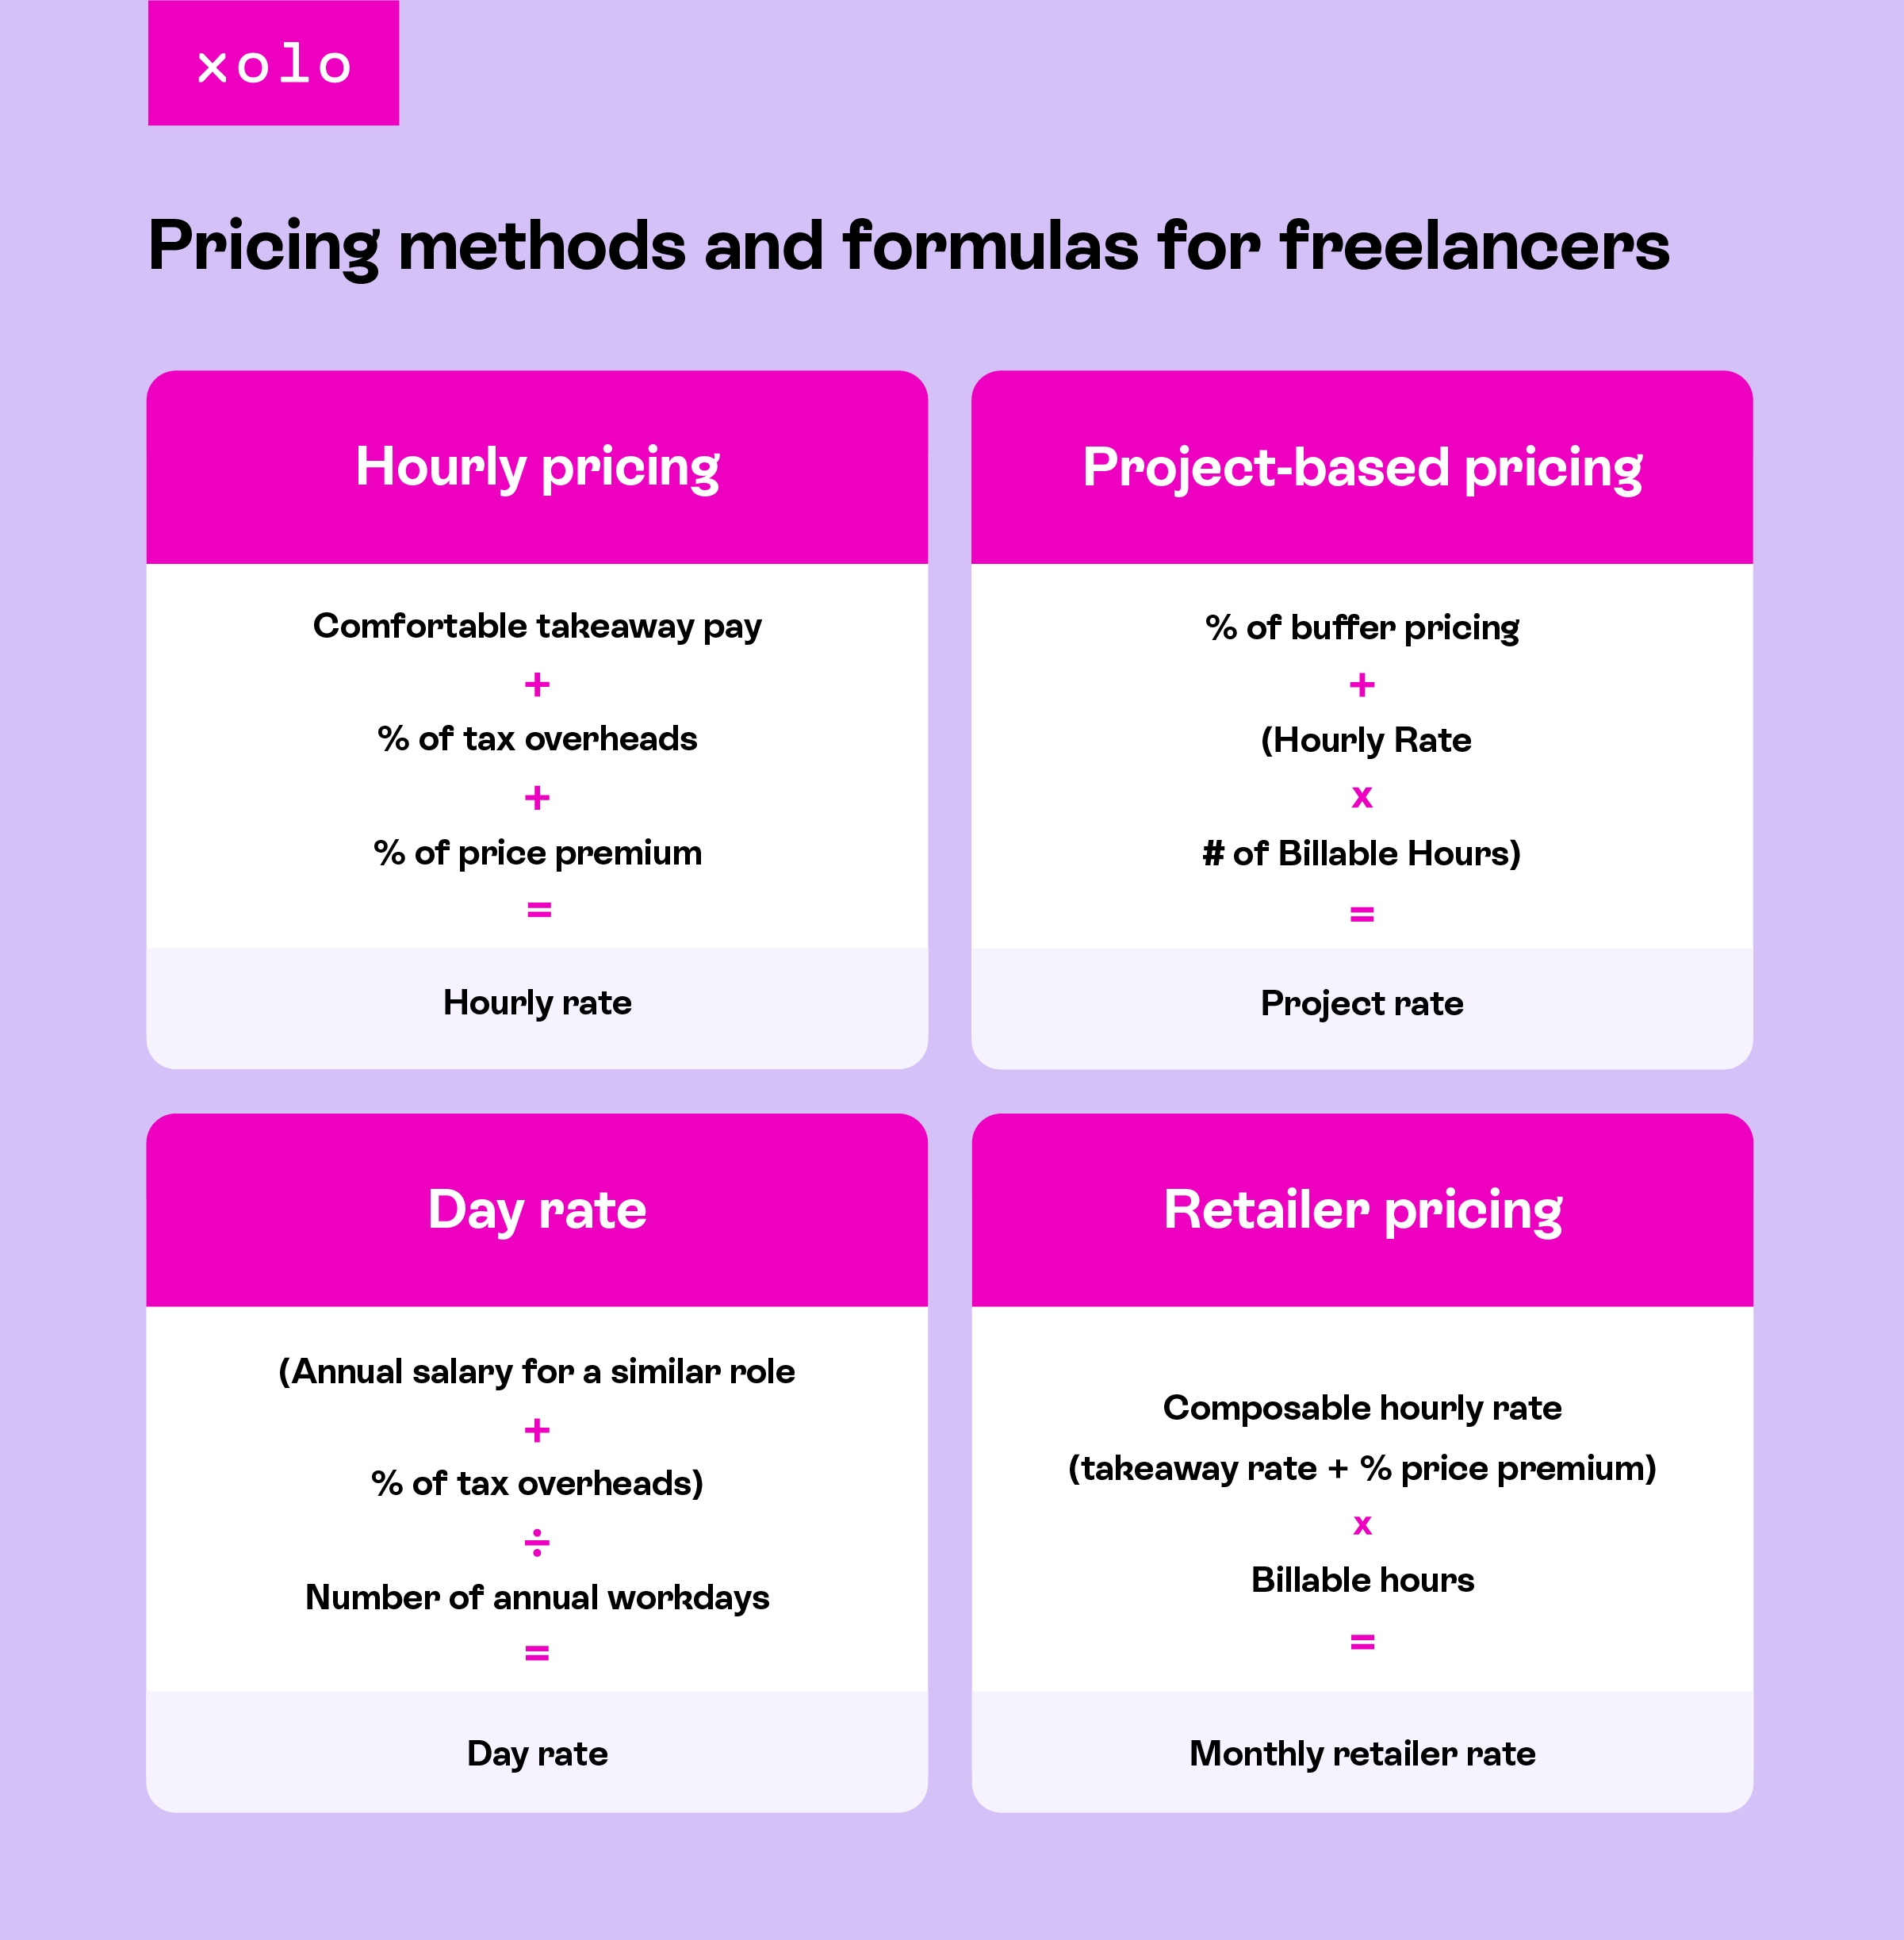 Pricing methods and formulas for freelancers